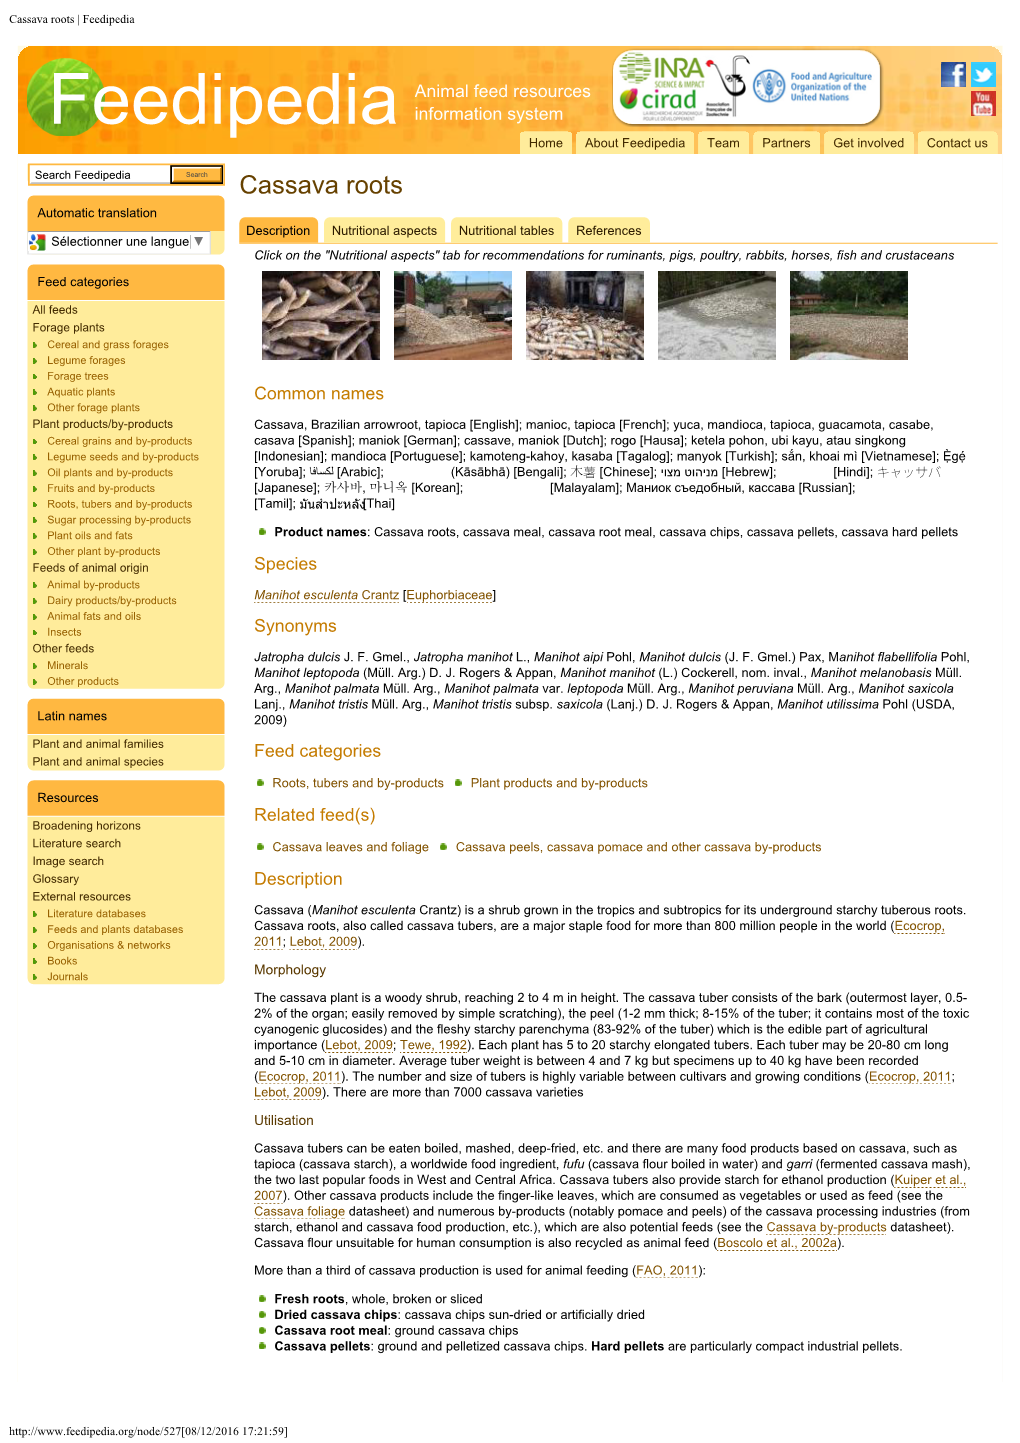 Cassava Roots | Feedipedia